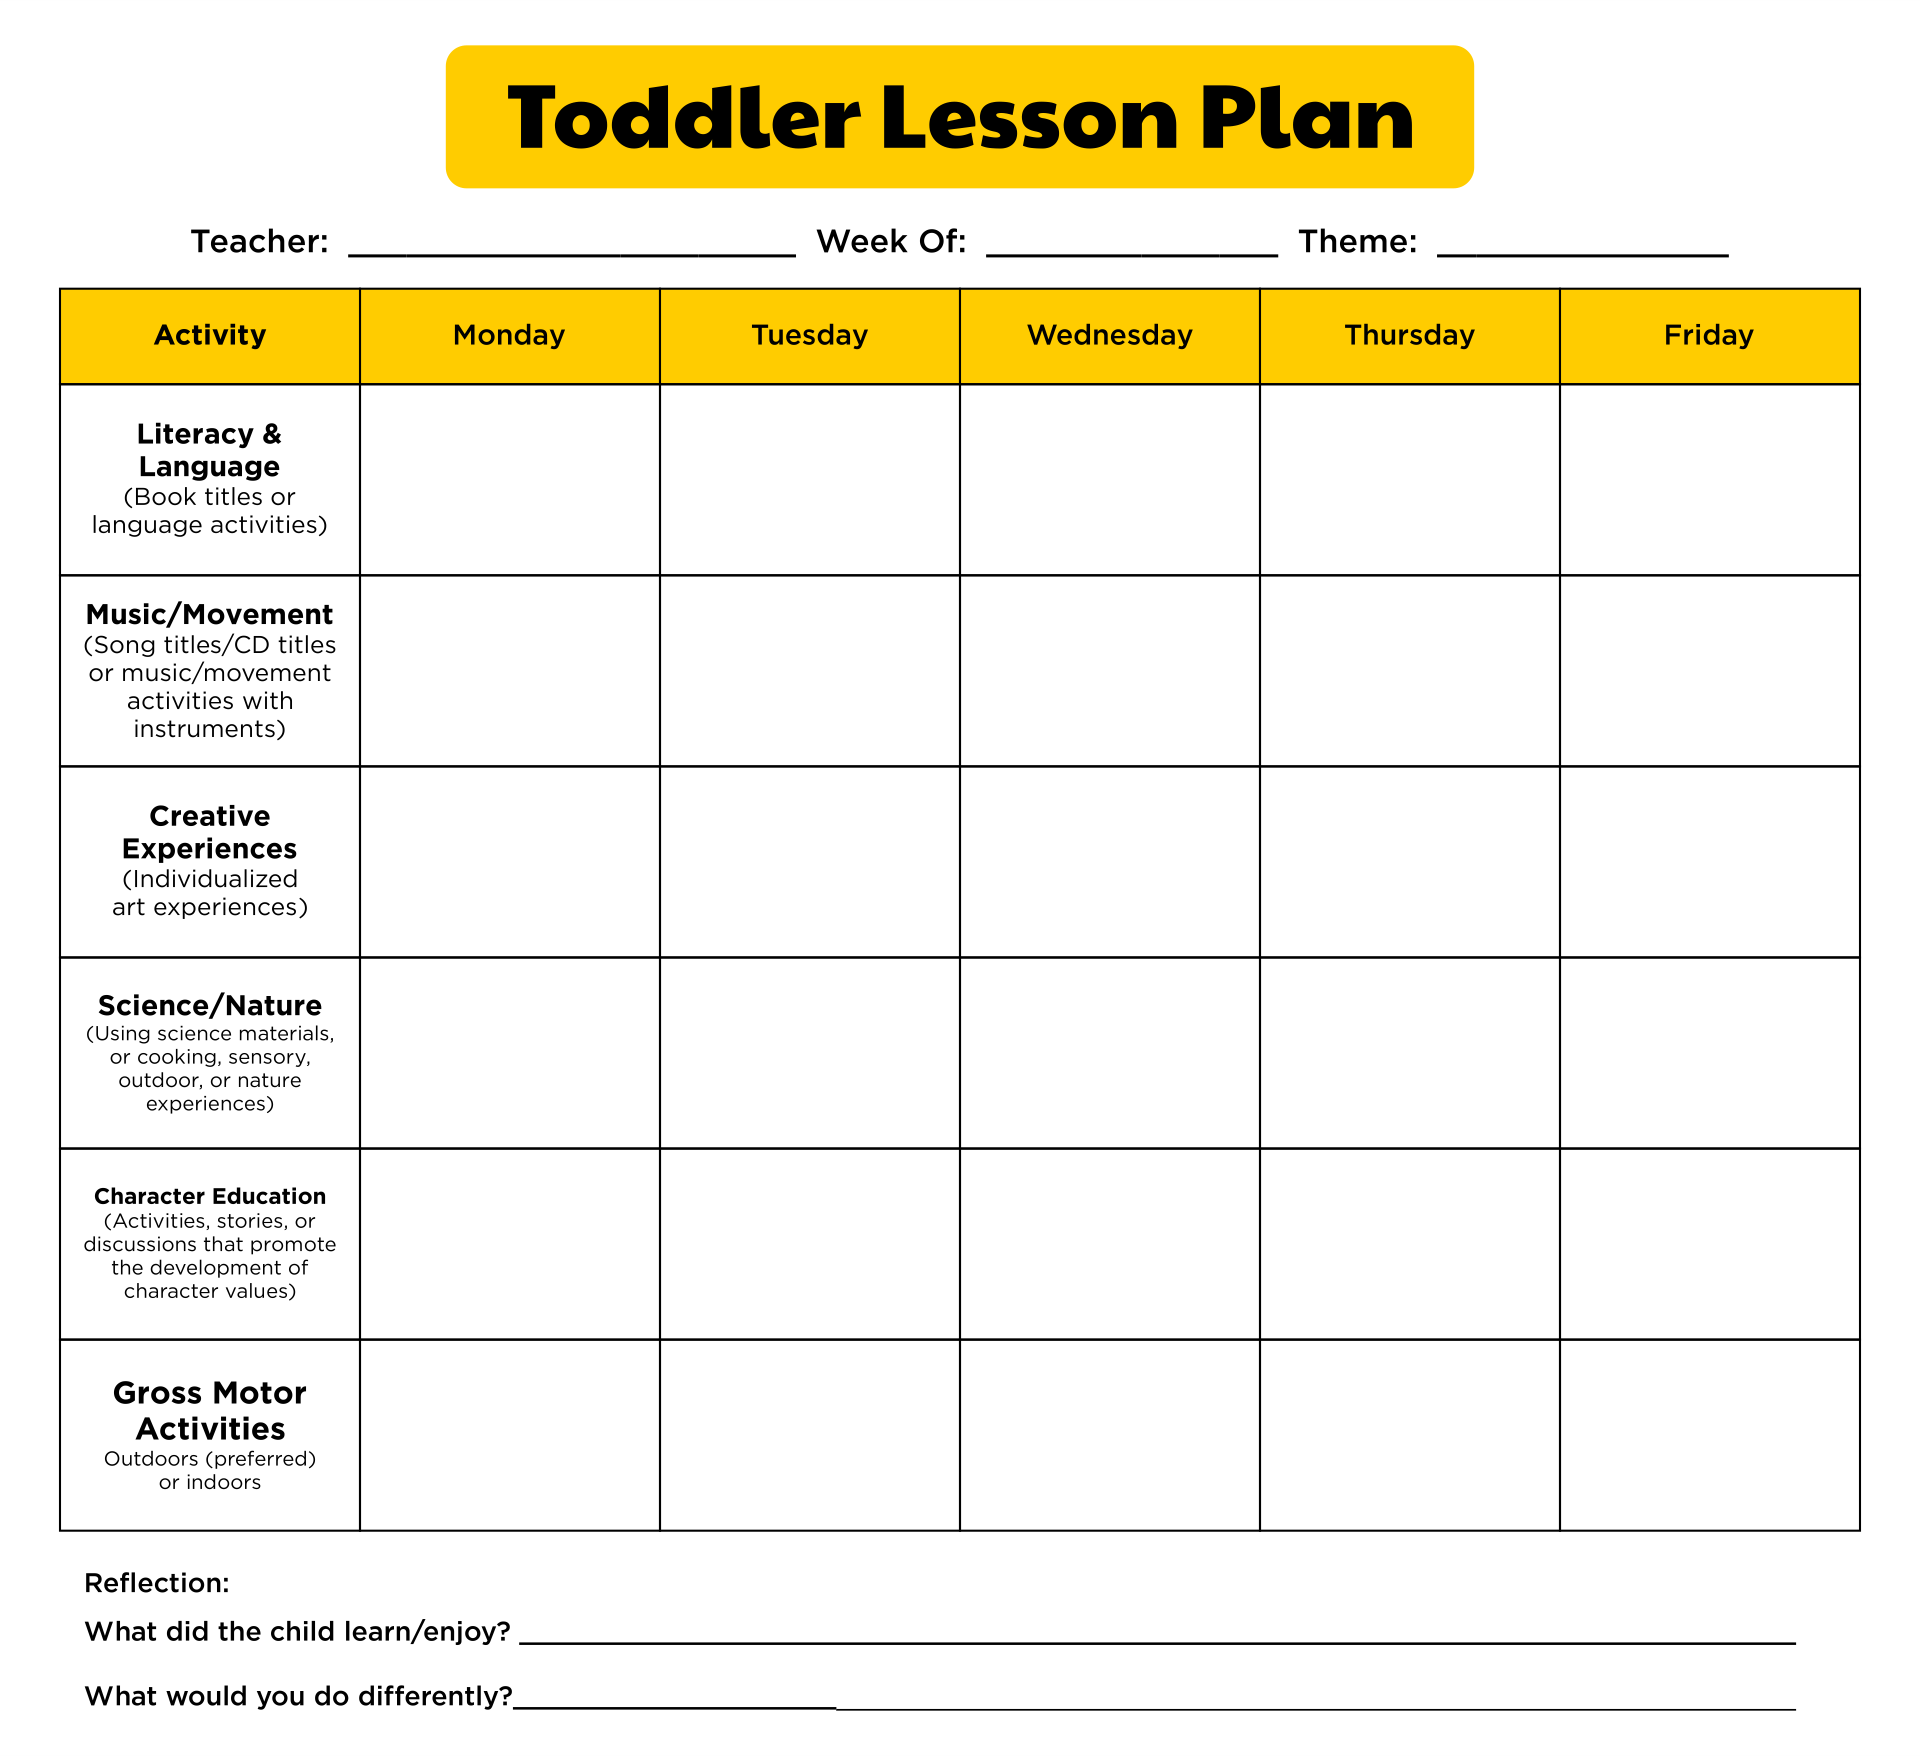 Free Printable Toddler Lesson Plan Template